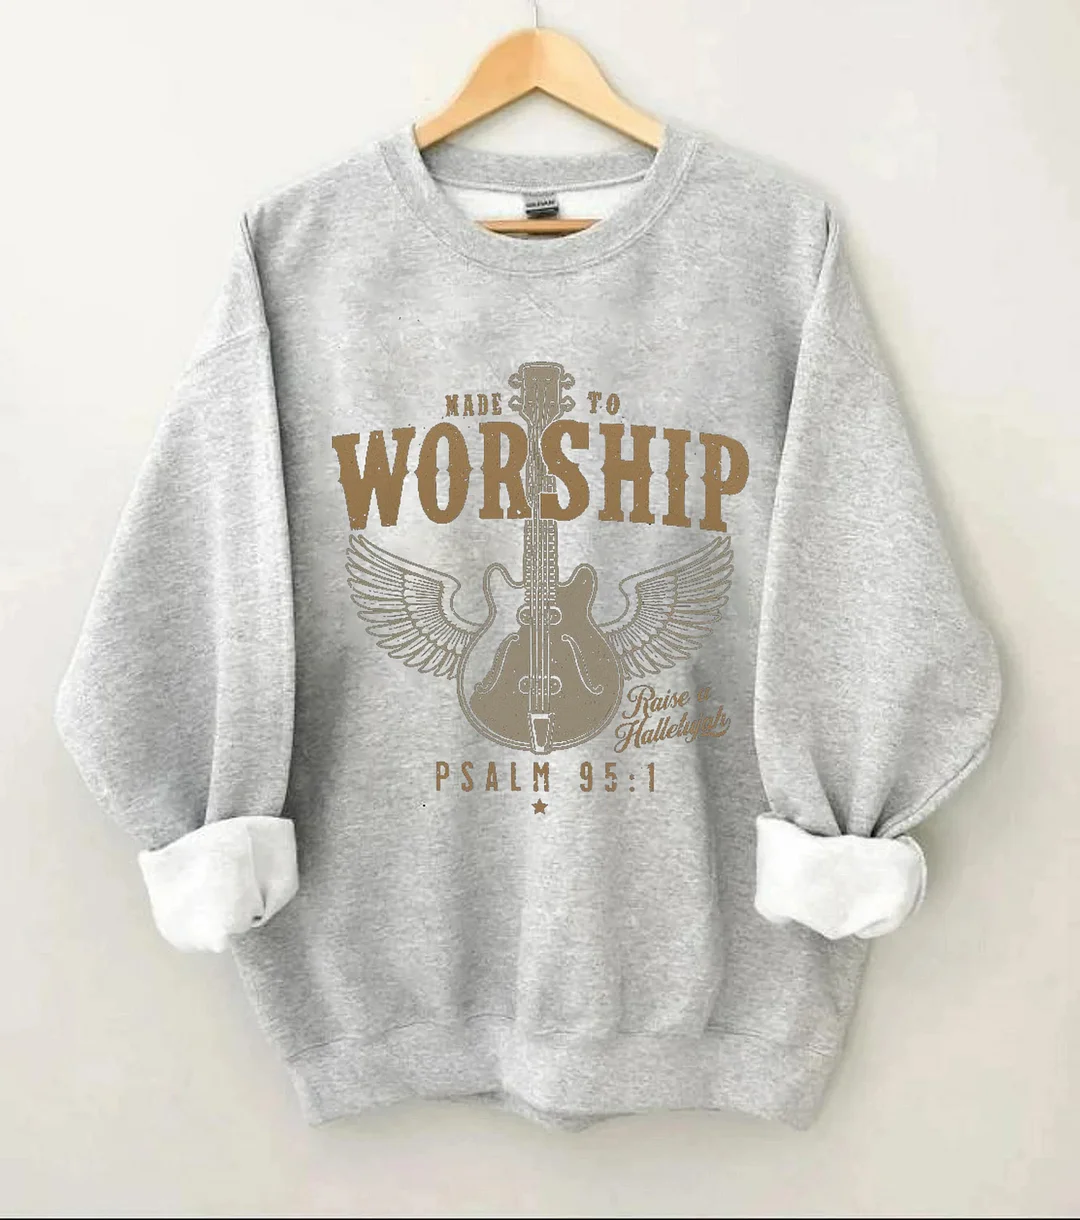 Worship Shirt Psalm 95 Faith Sweatshirt